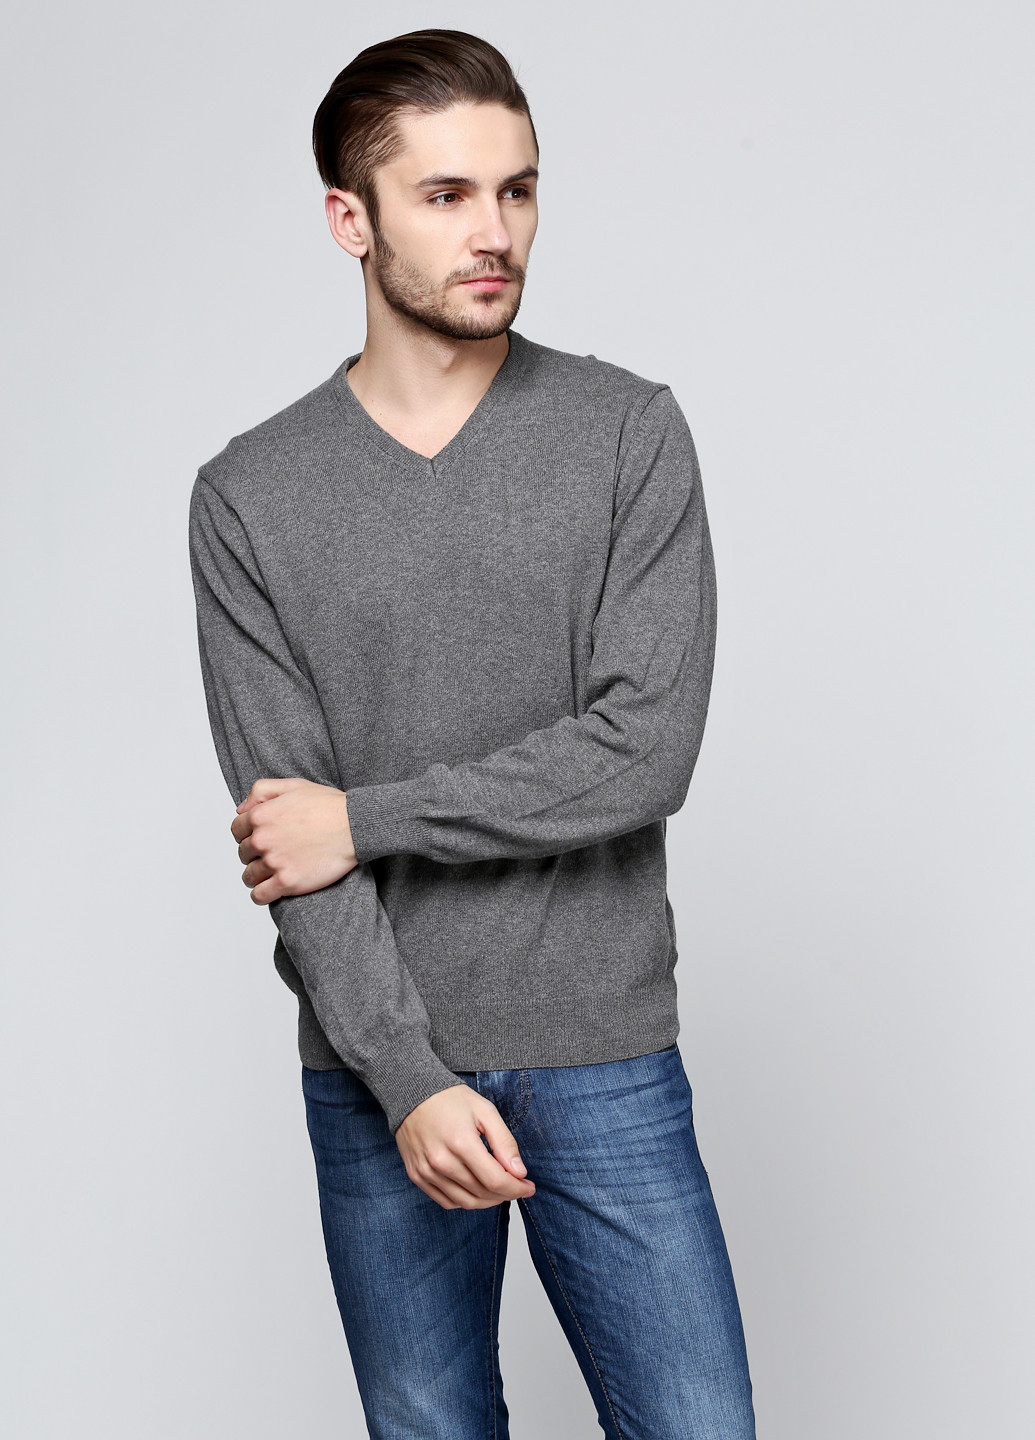 Серый демисезонный пуловер пуловер Magliere Di Perugia